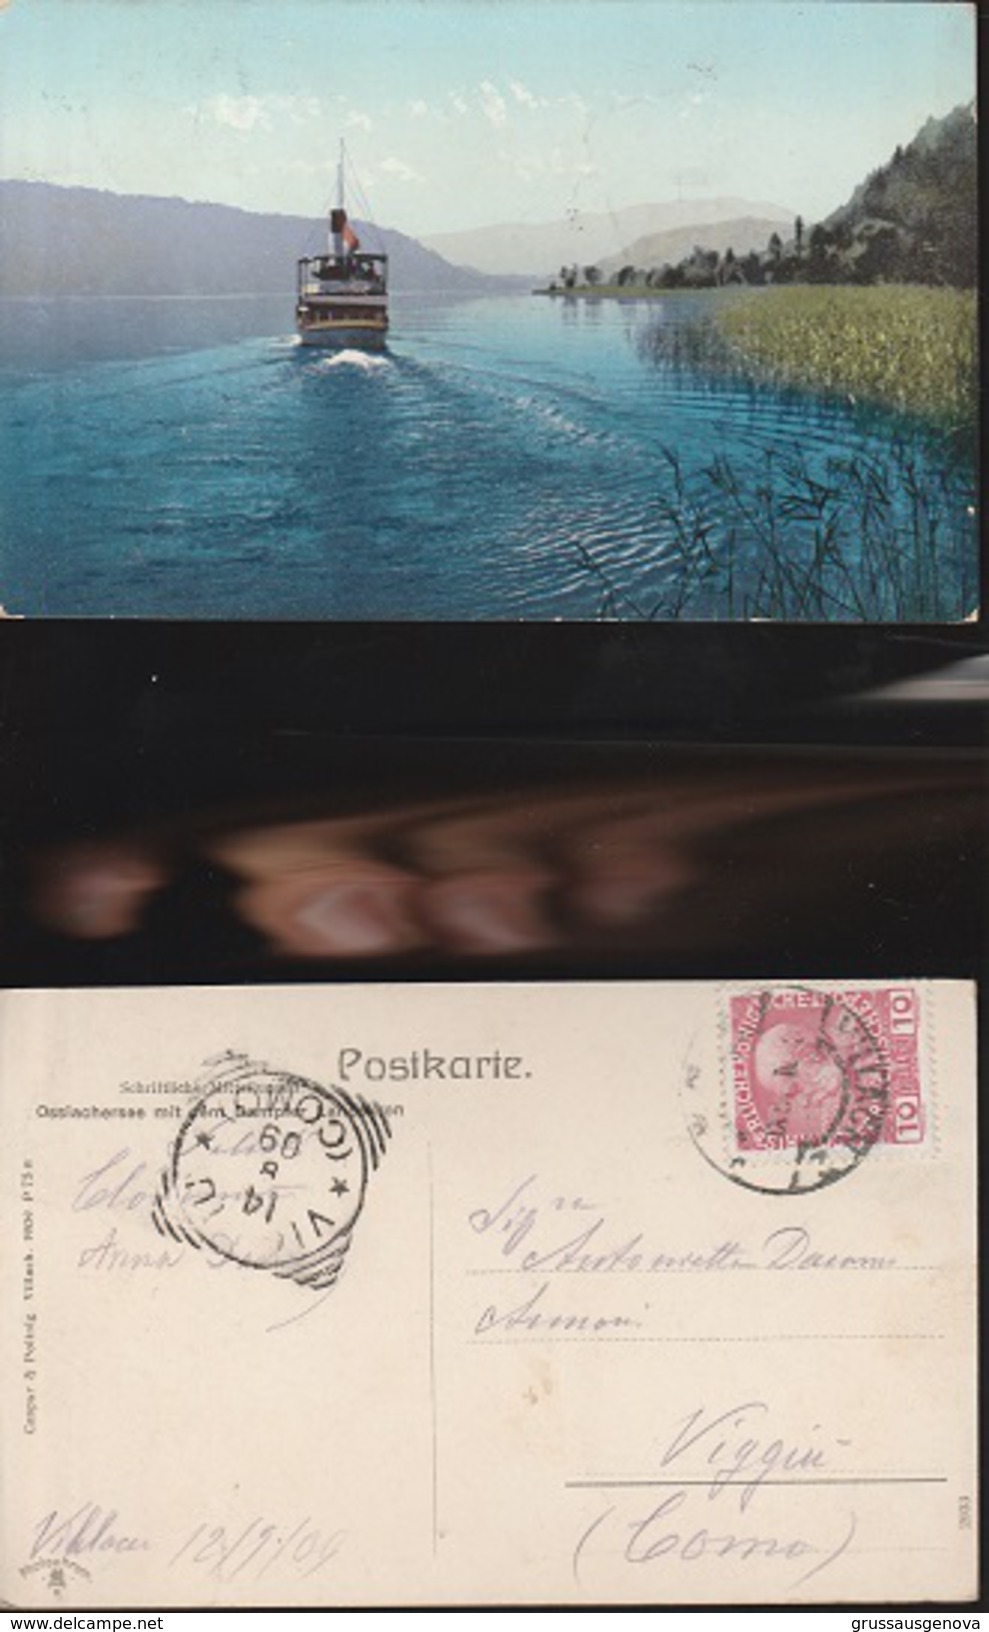 7869) AUSTRIA OSSIACHERSEE MIT DEM DAMPFER LANDEKRON VIAGGIATA 1909 - Ossiachersee-Orte